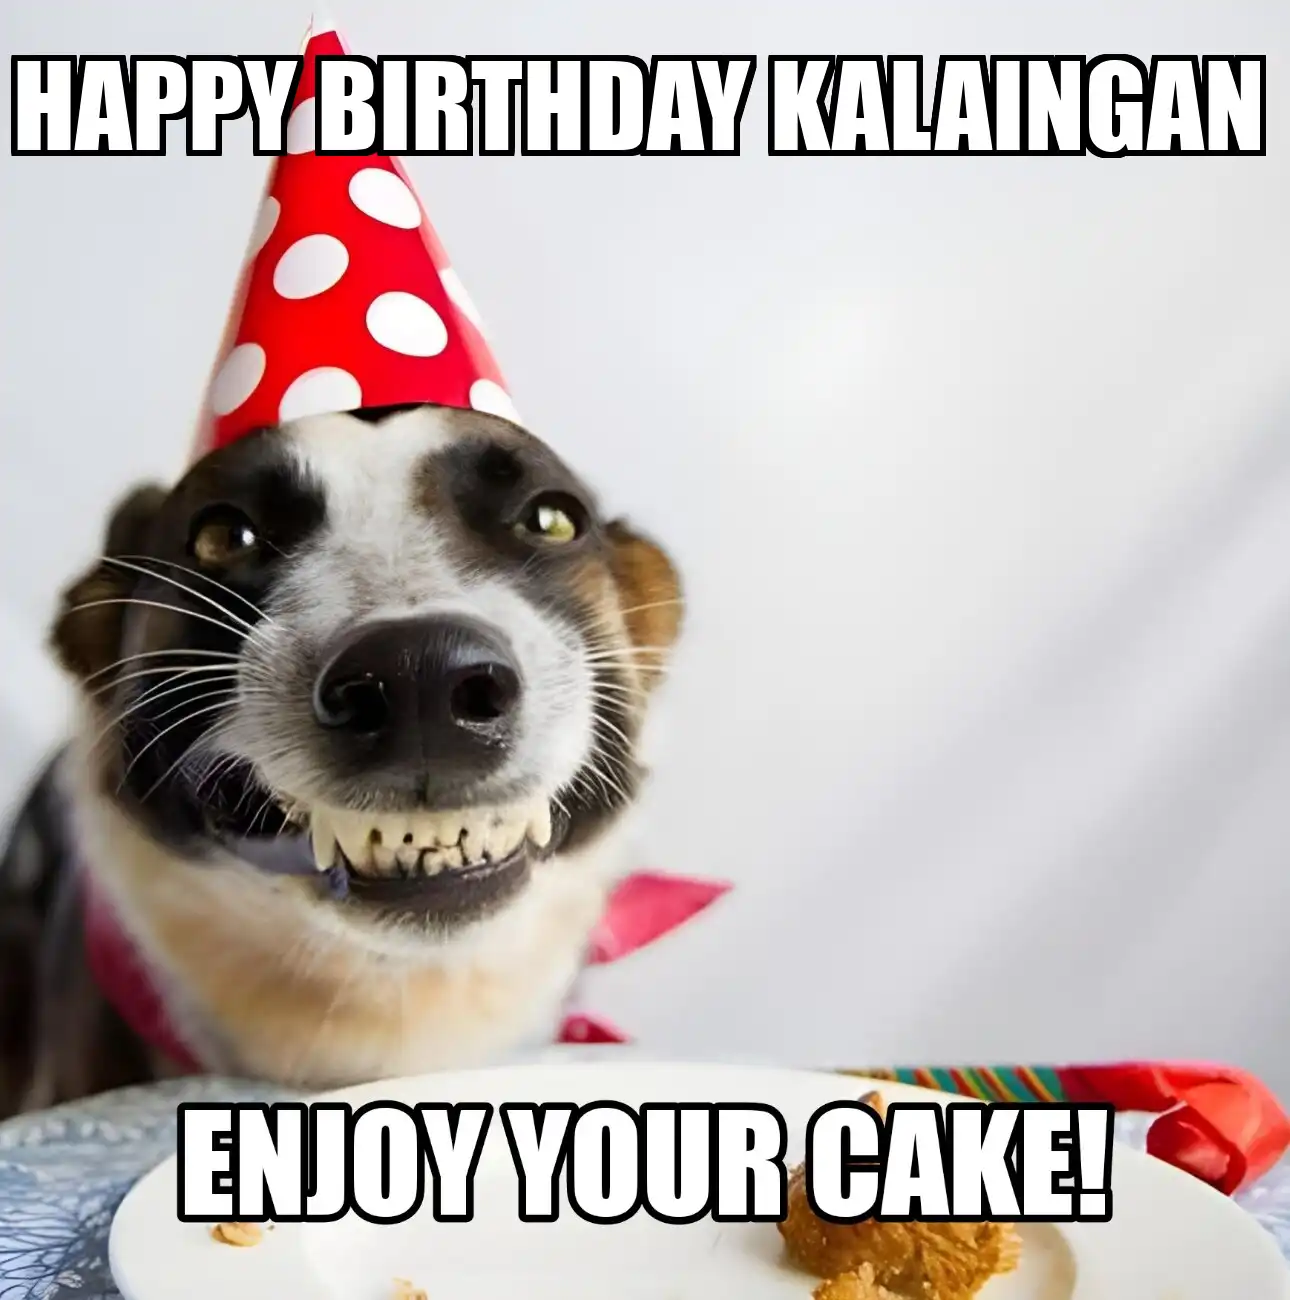 Happy Birthday Kalaingan Enjoy Your Cake Dog Meme